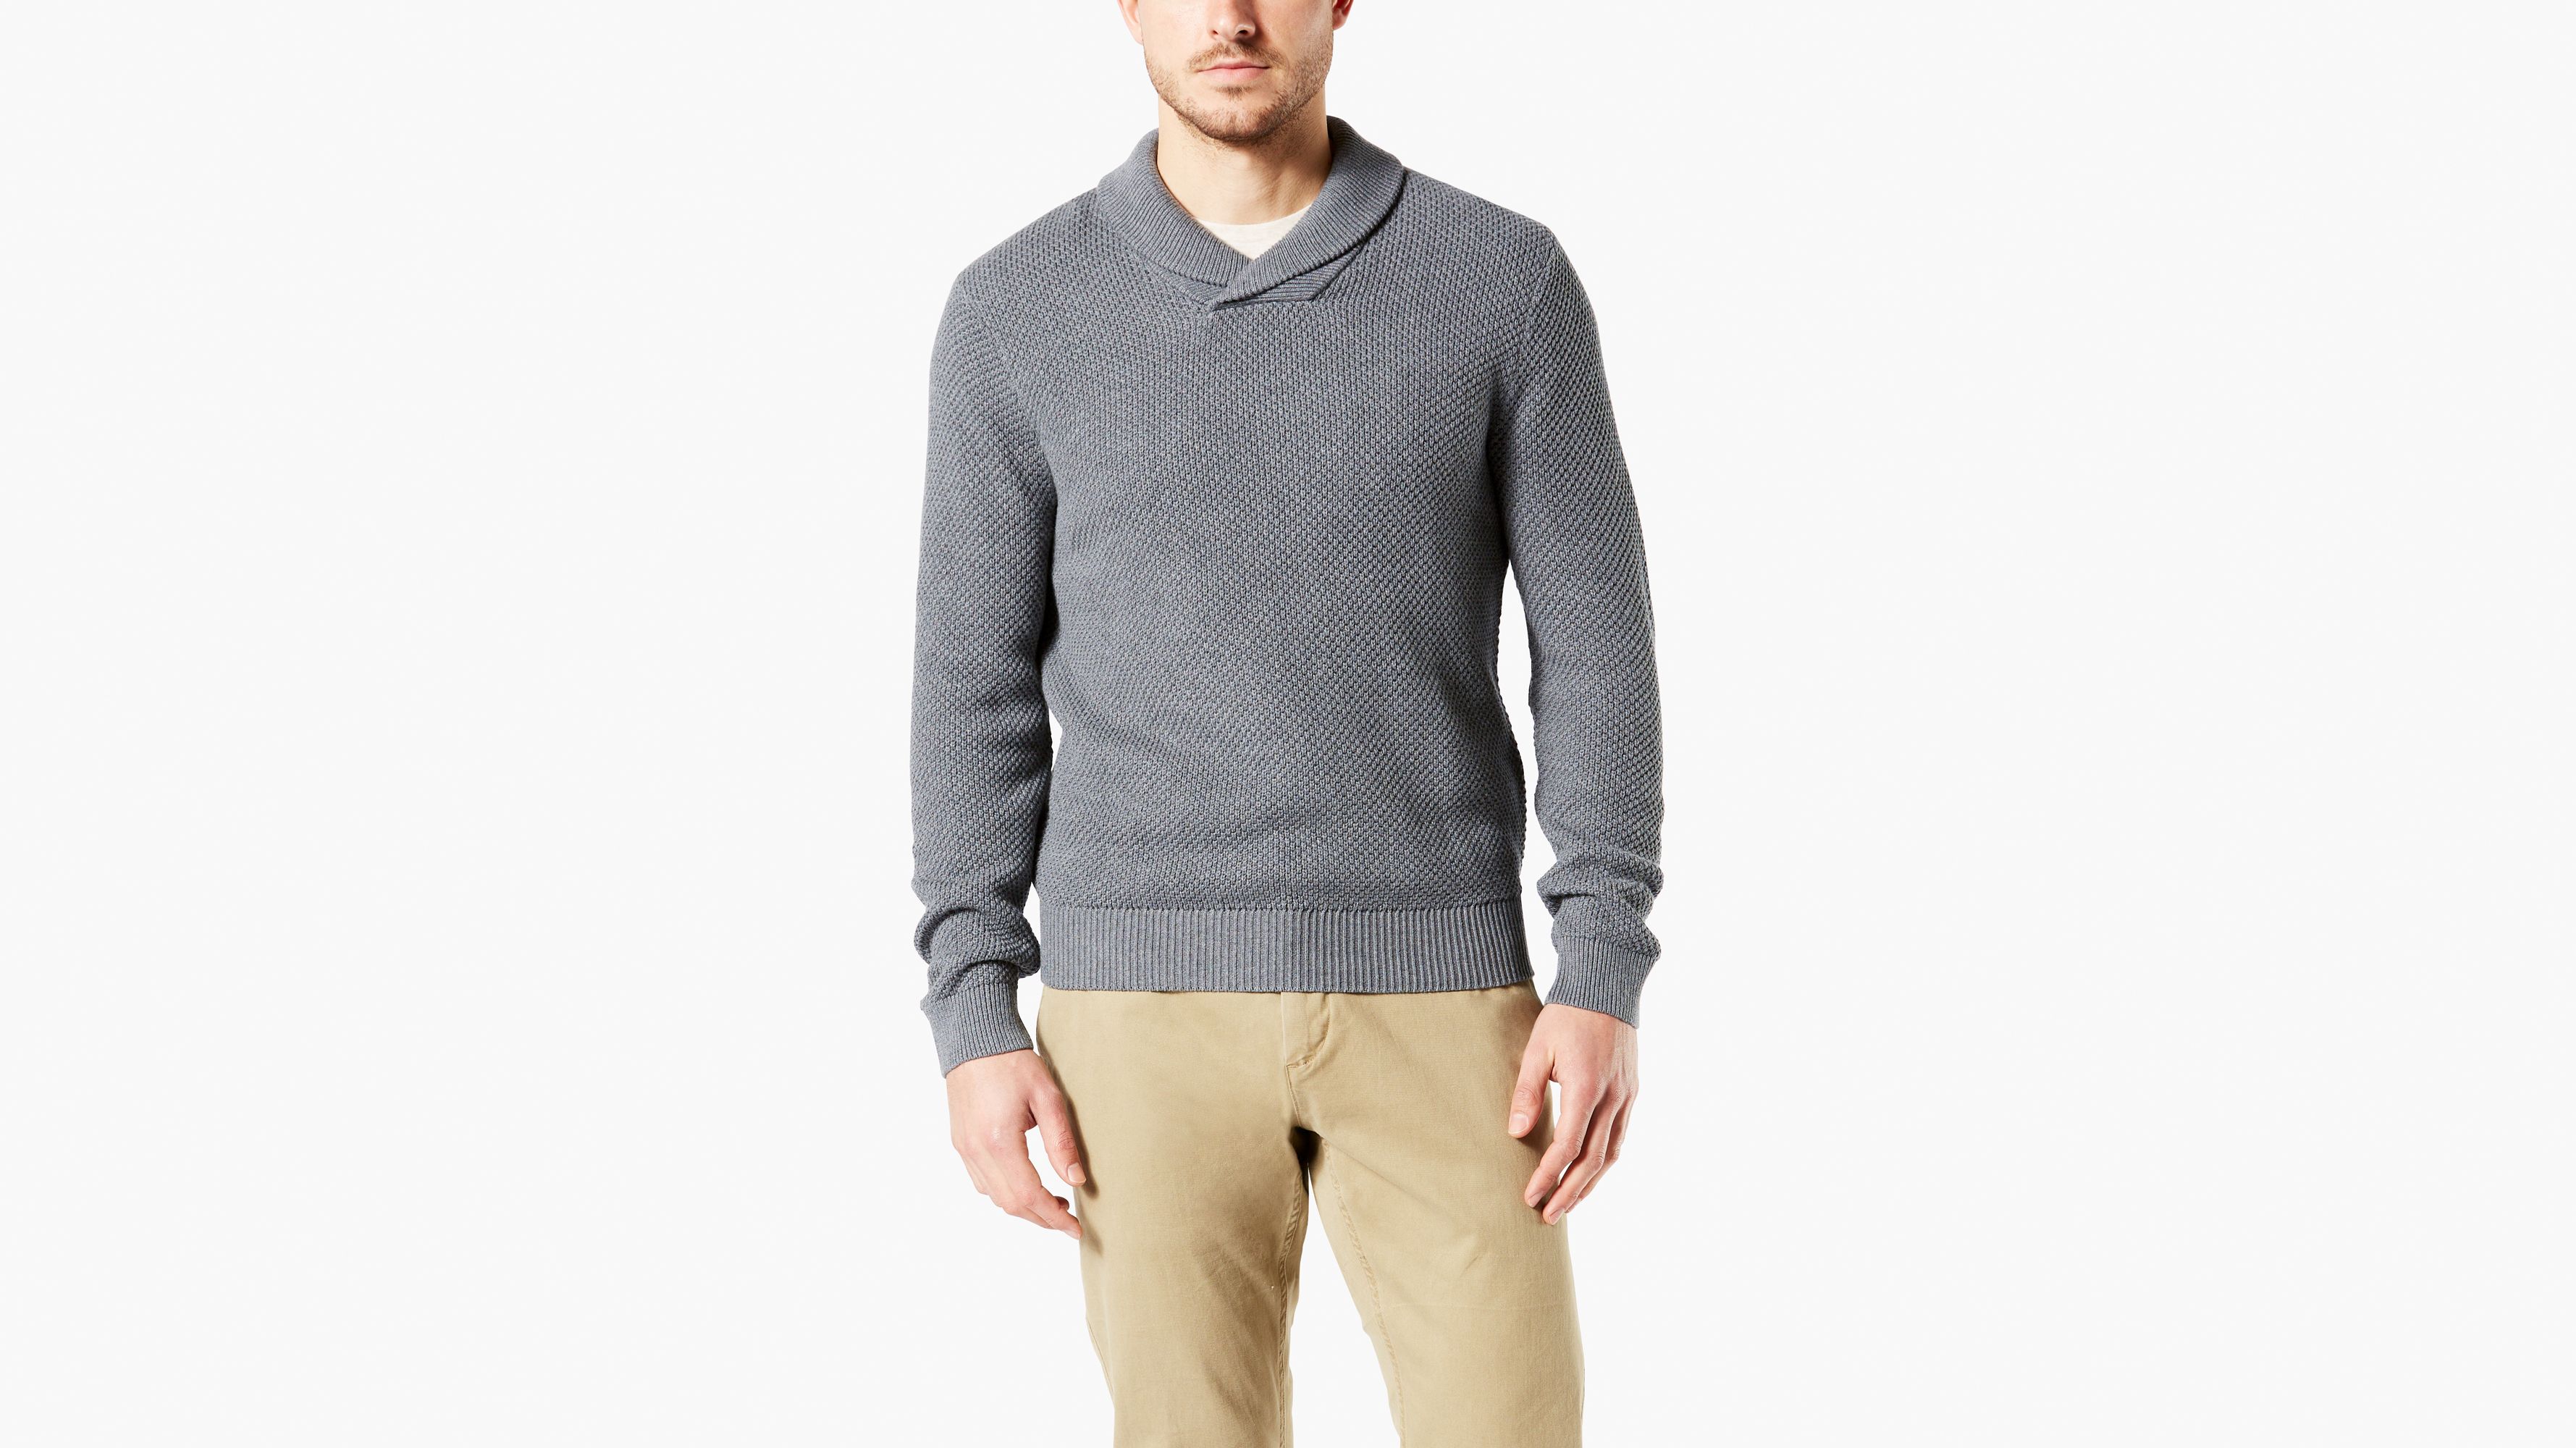 Download Sweaters & Sweatshirts for Men - Men's V-Neck Sweaters ...